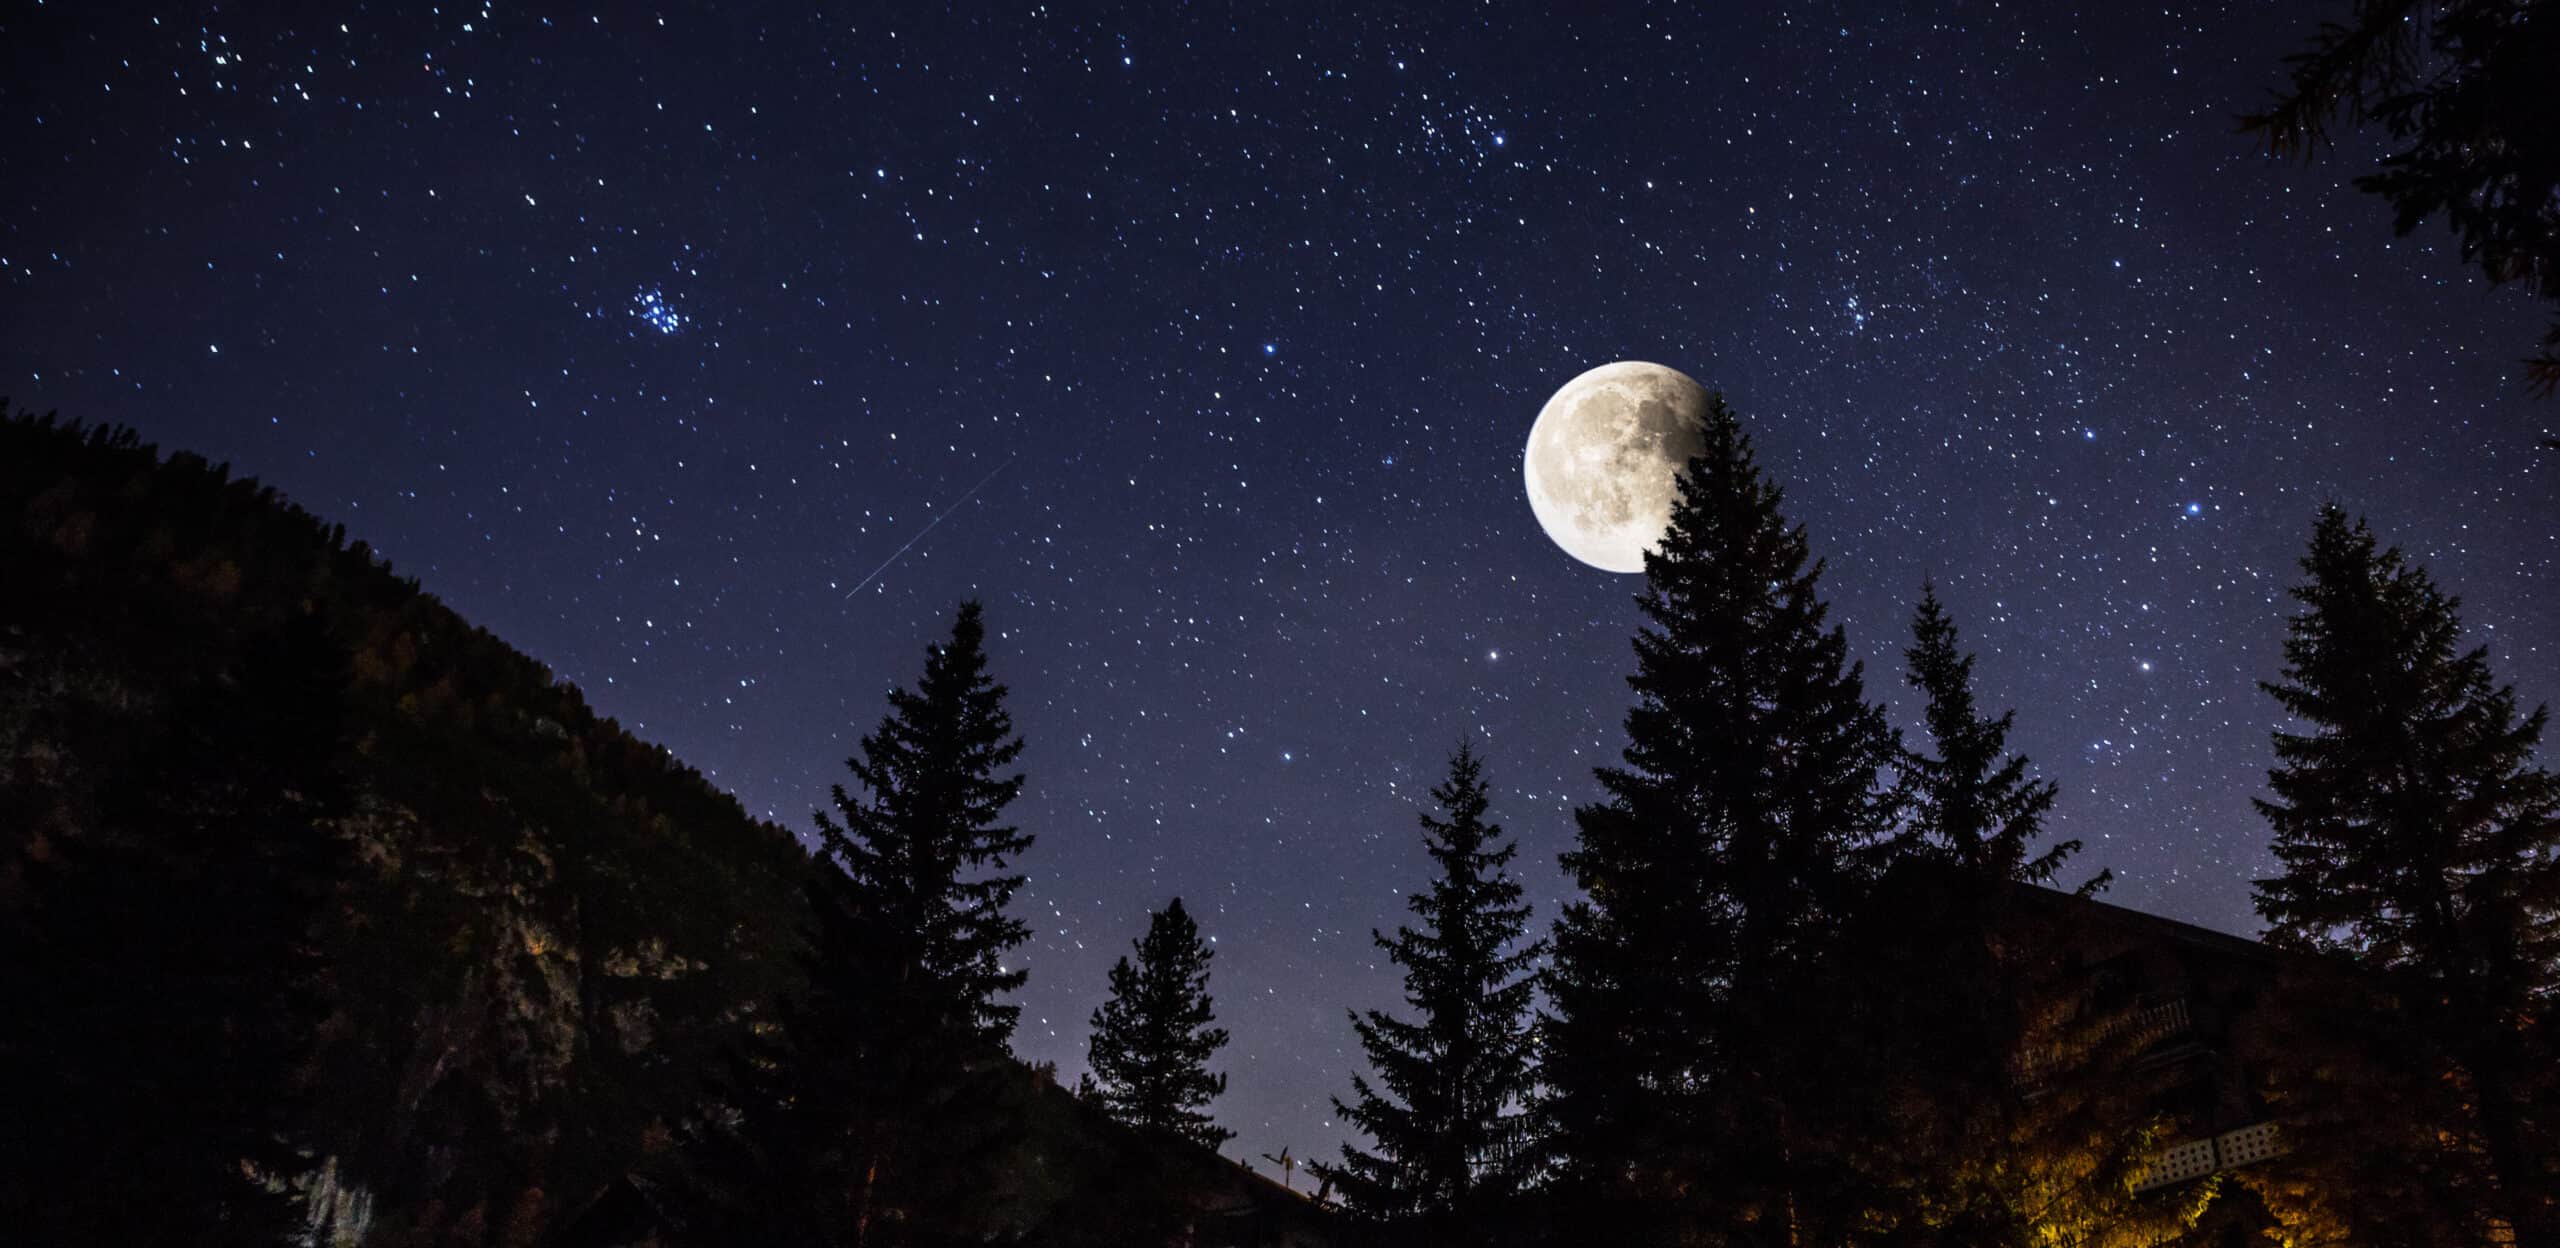 Top 5 Spots for Stargazing in North Carolina